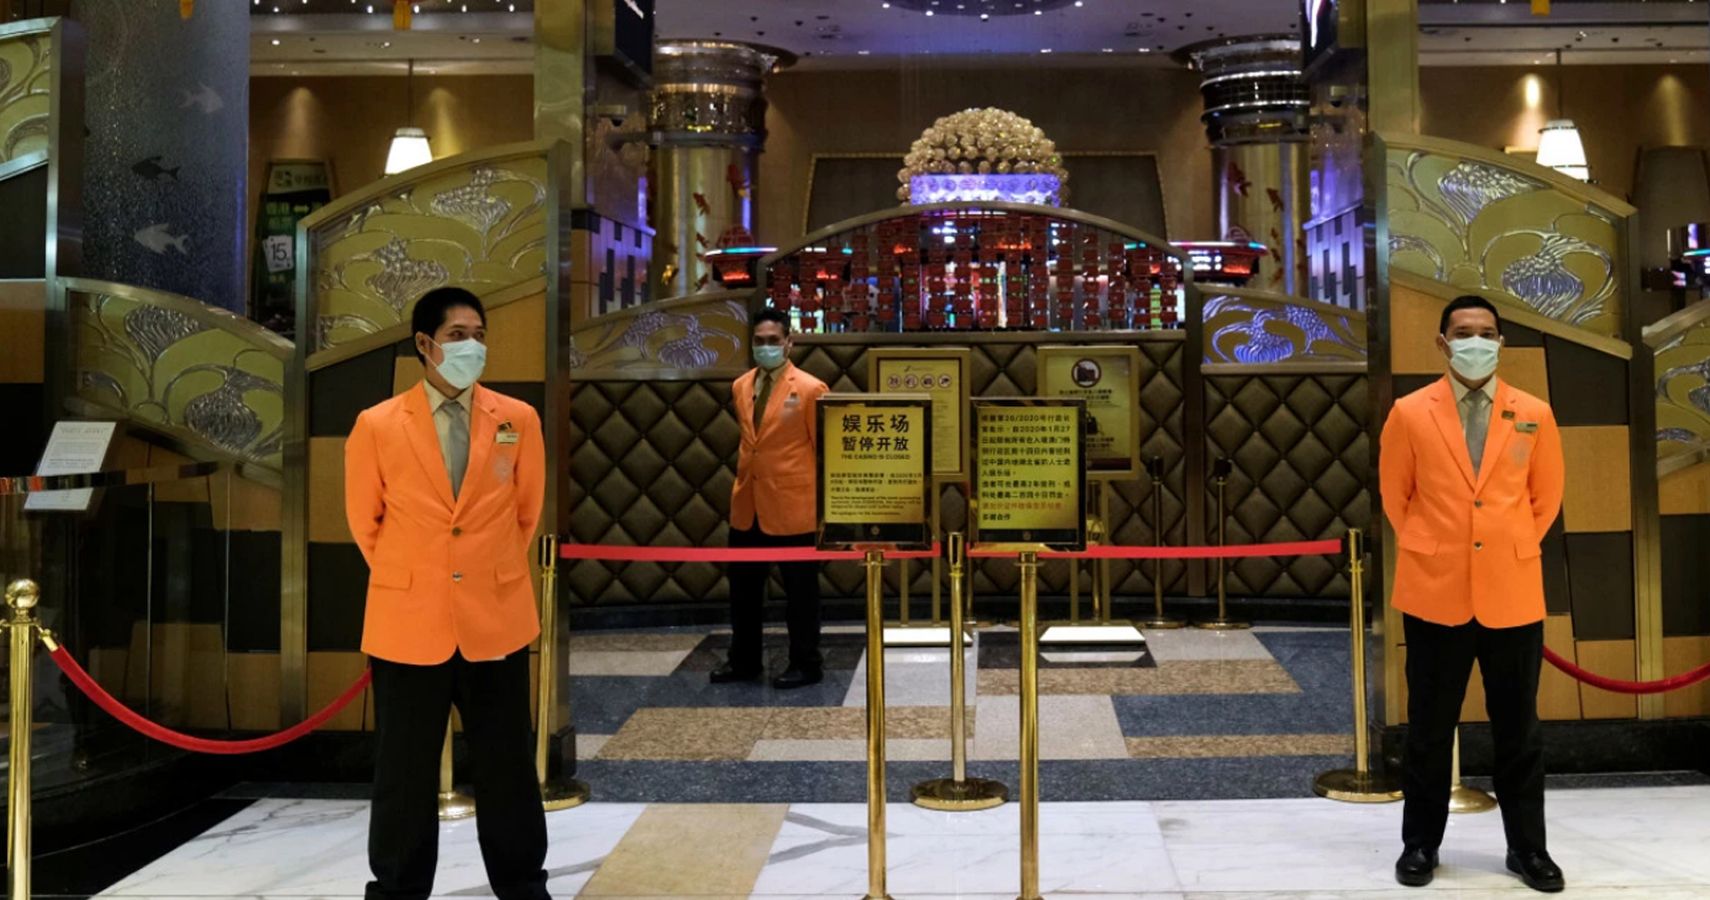 Maasked attendants outside Macau casino